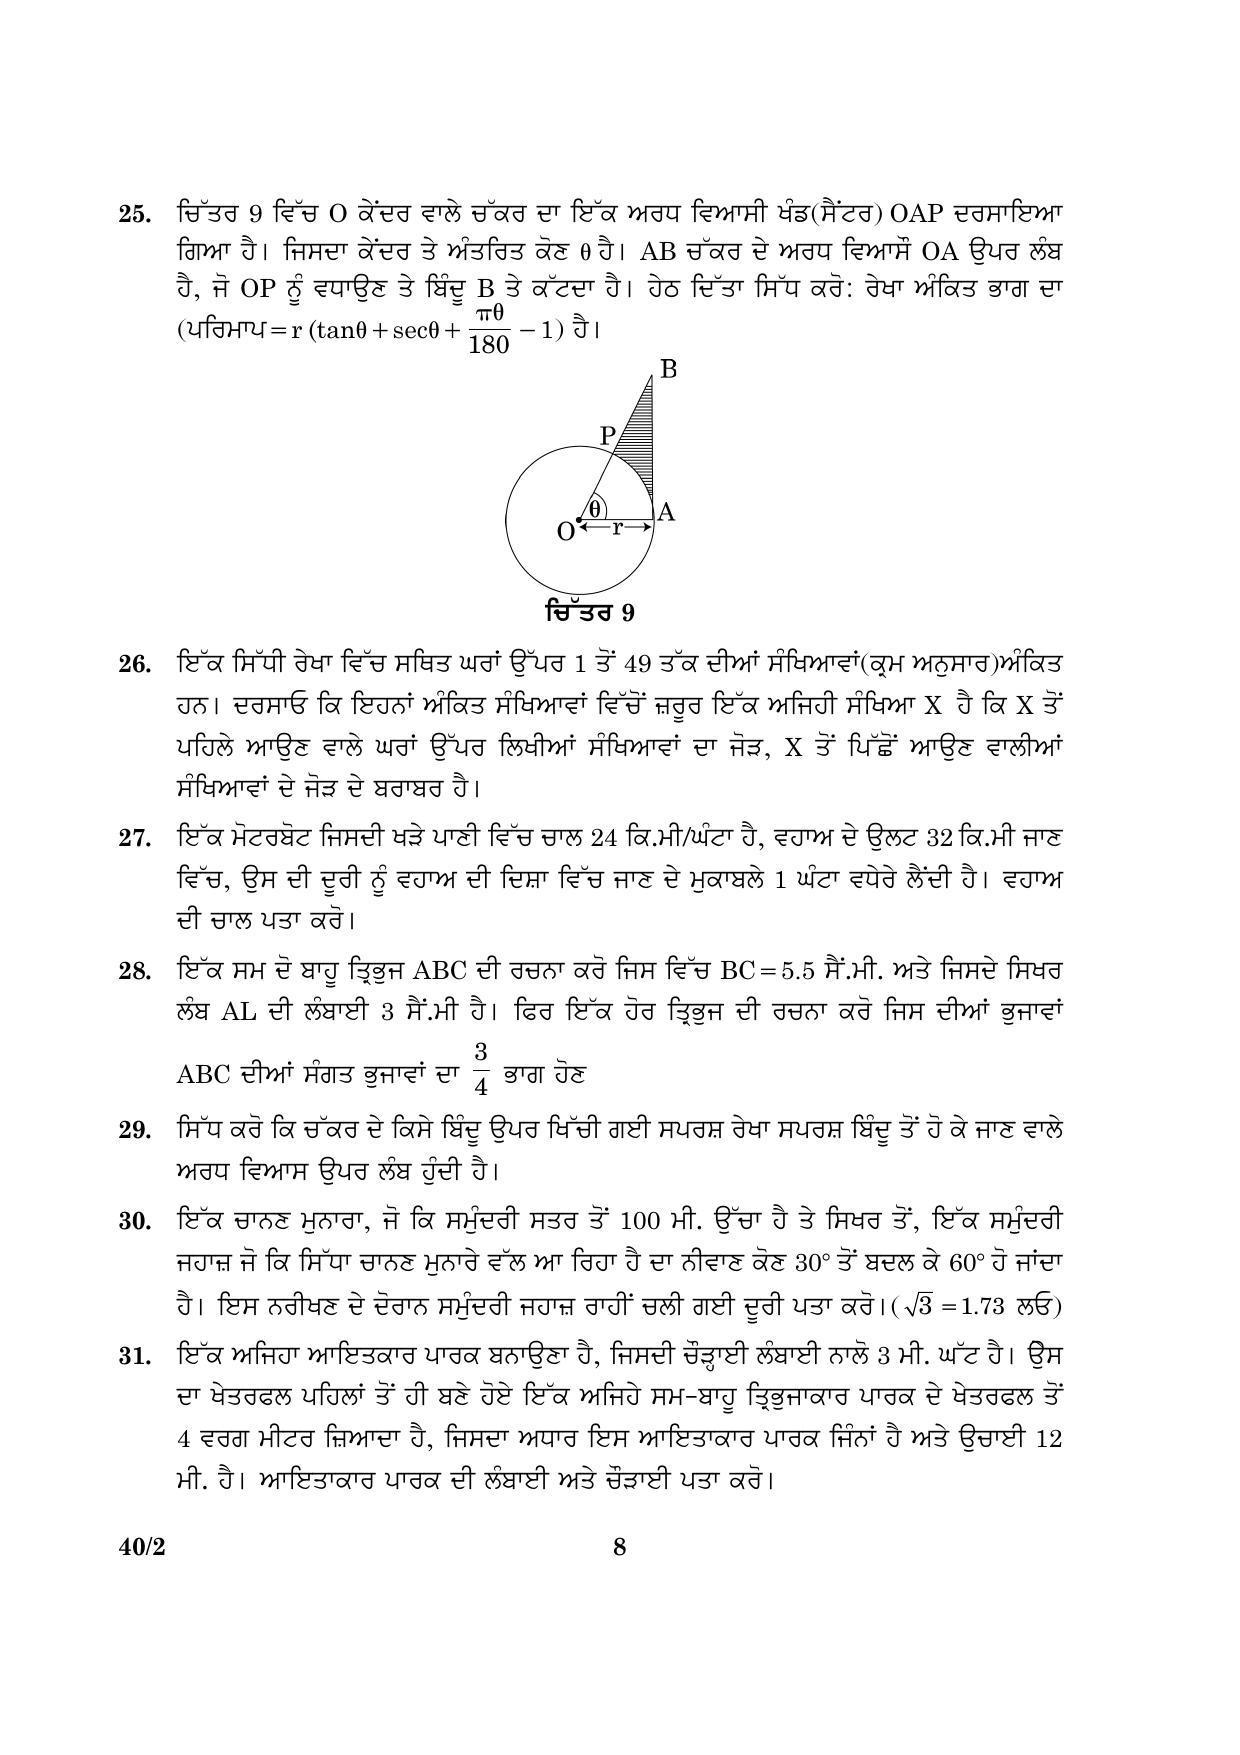 CBSE Class 10 040 Mathematics Punjabi 2 2016 Question Paper - Page 8